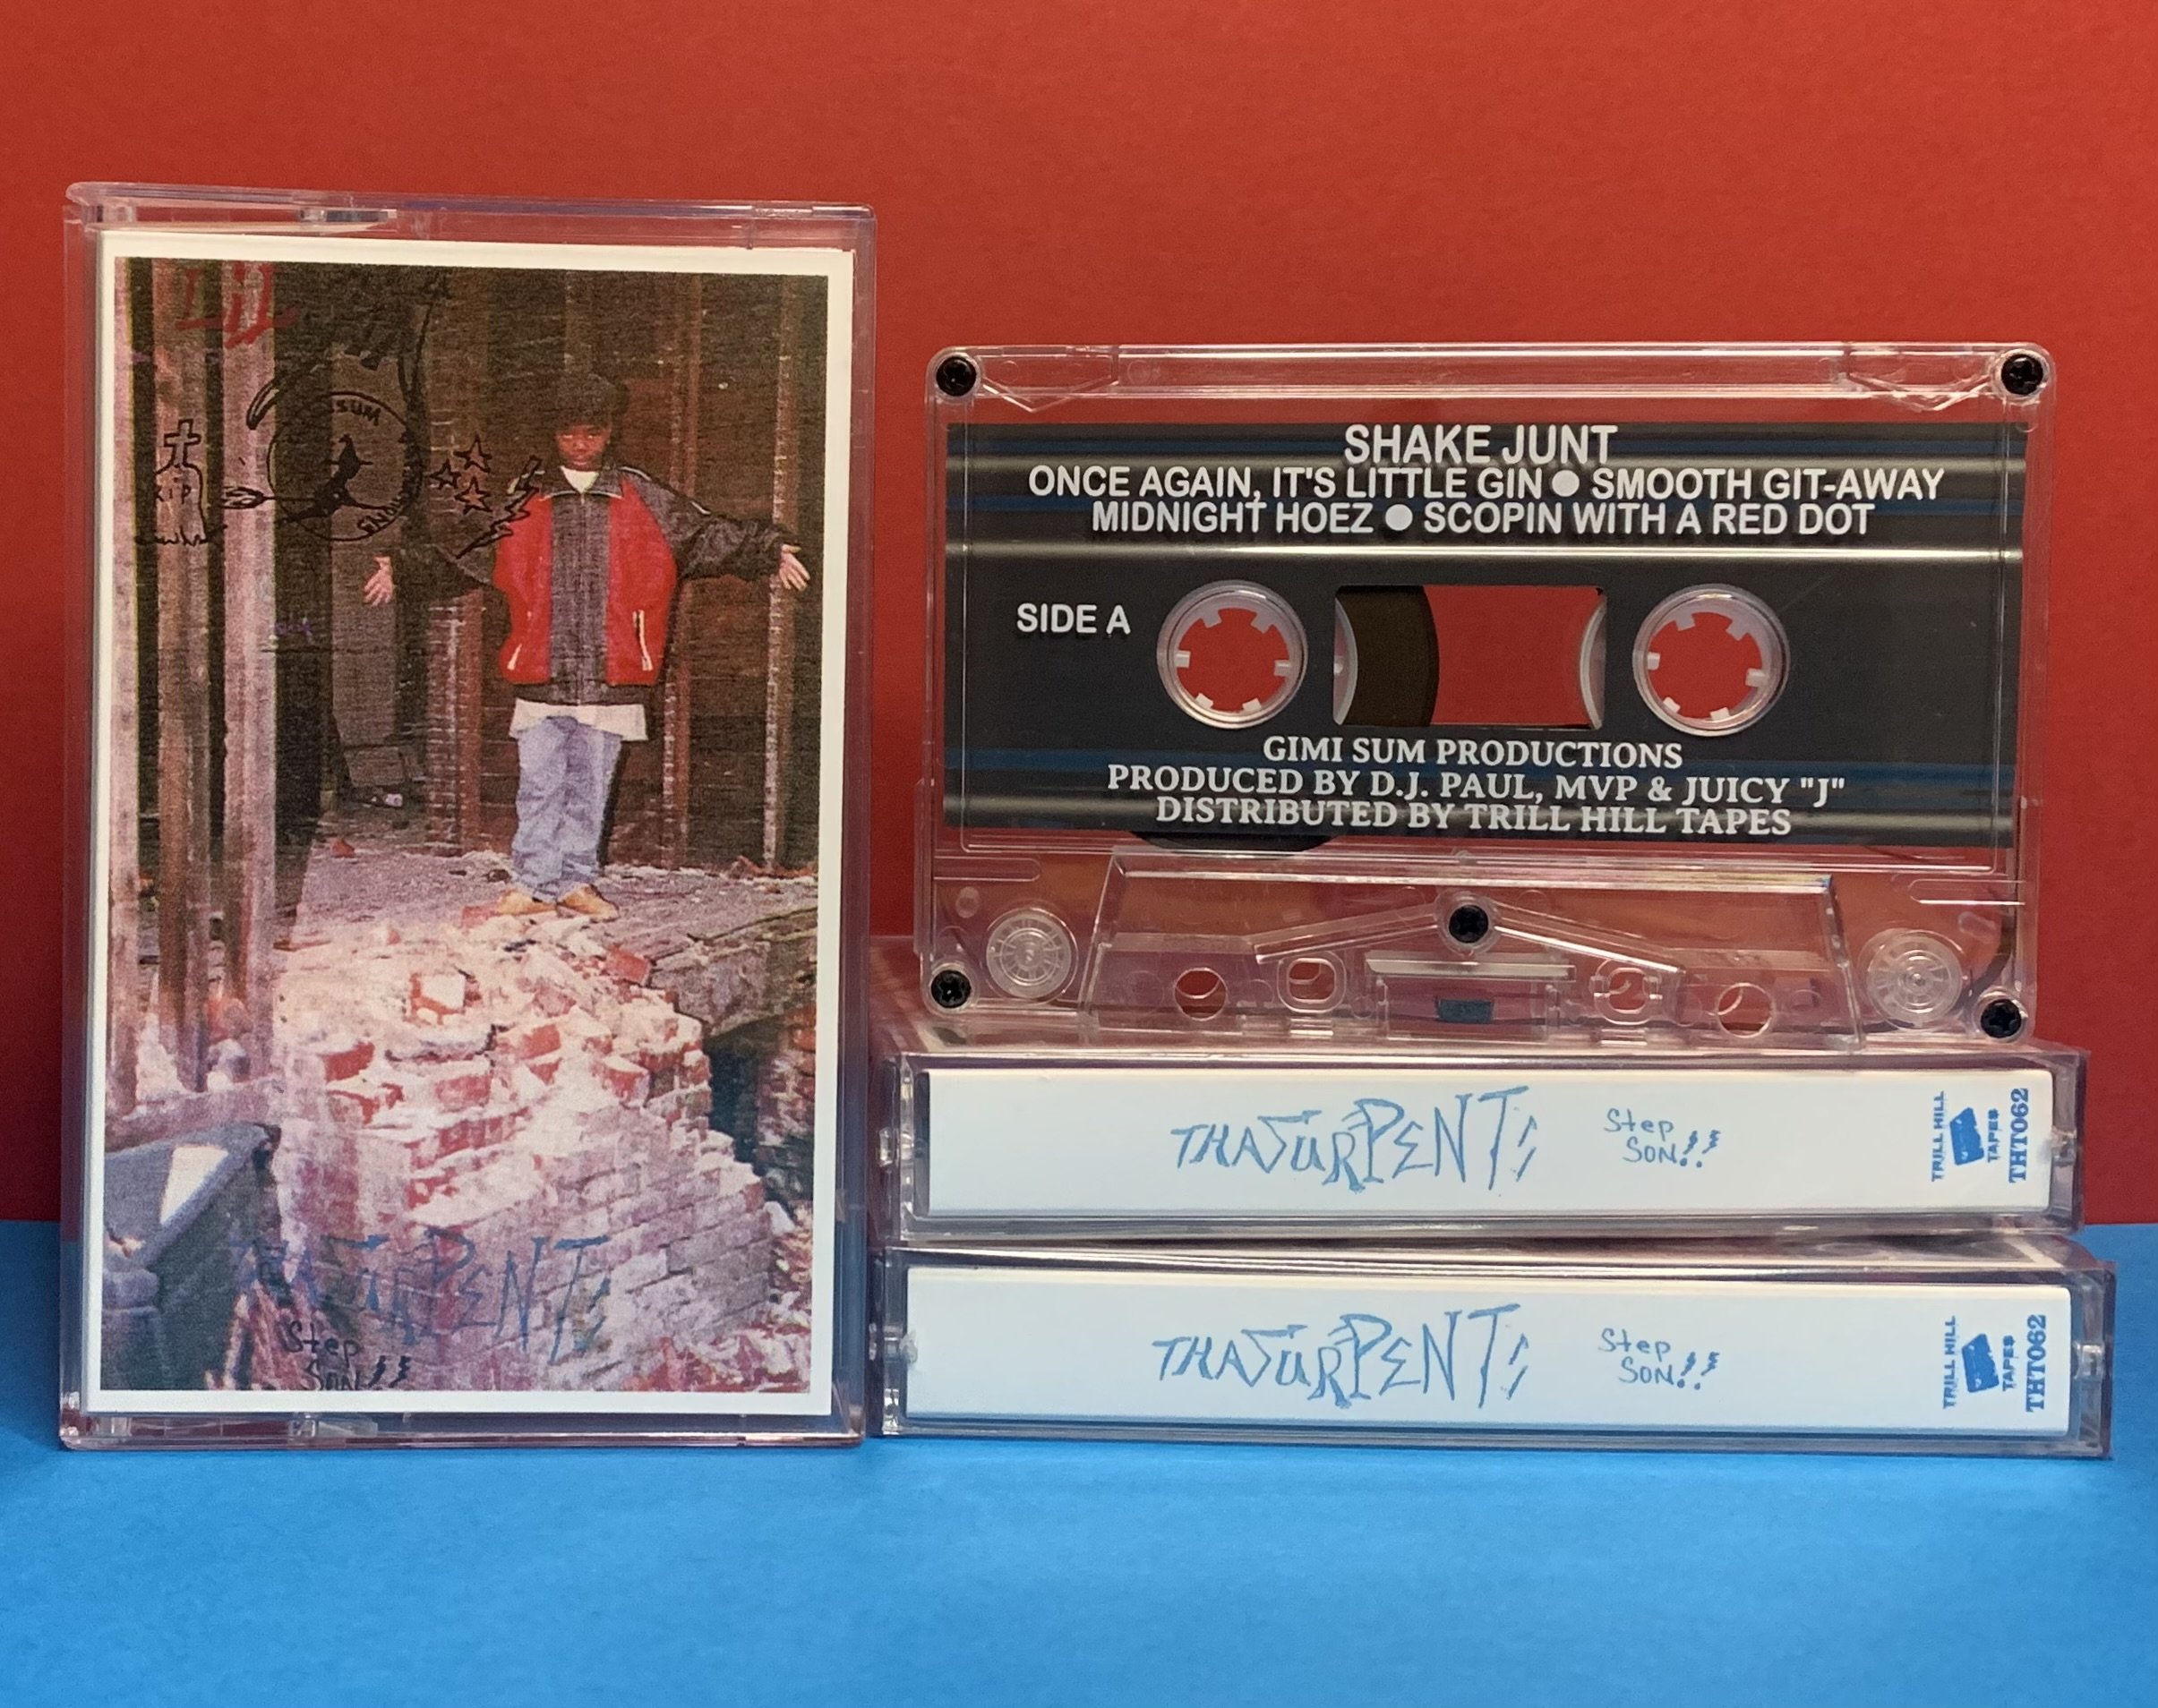 Goon Tape, Vol. 1 - EP by $kinny